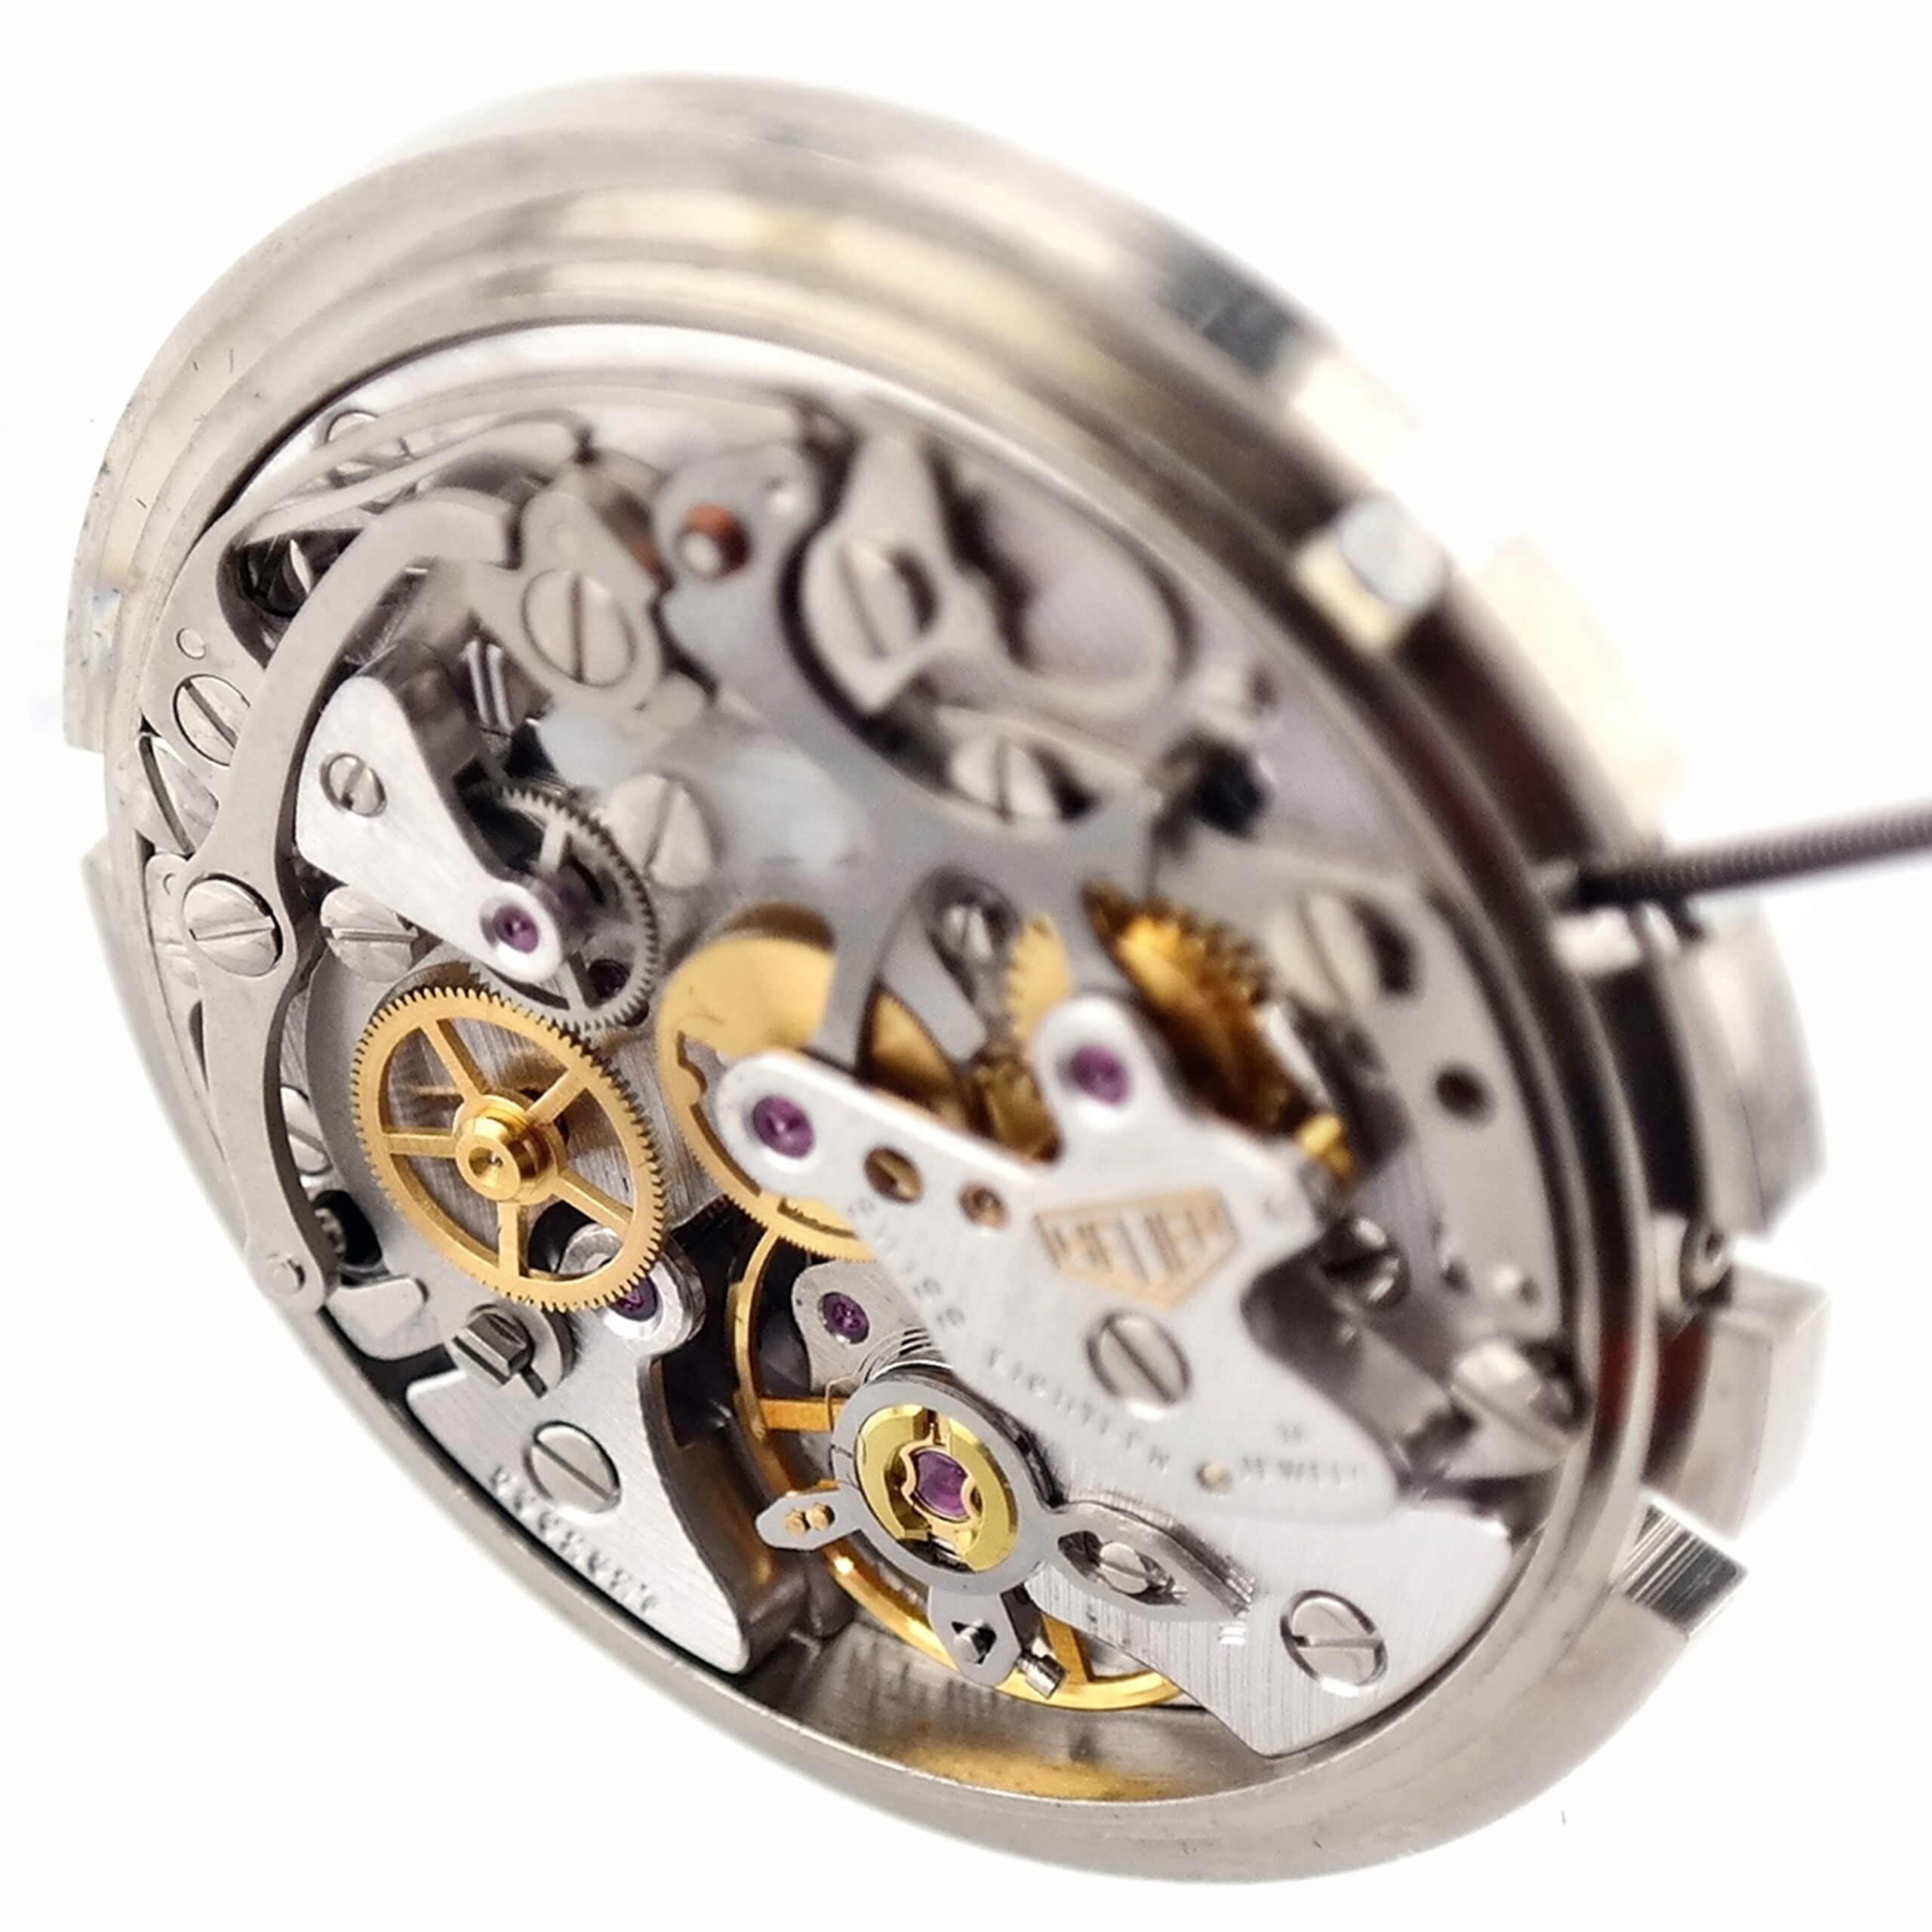 HEUER - Lemania 1873 - Swiss Made Chronograph Watch Movement